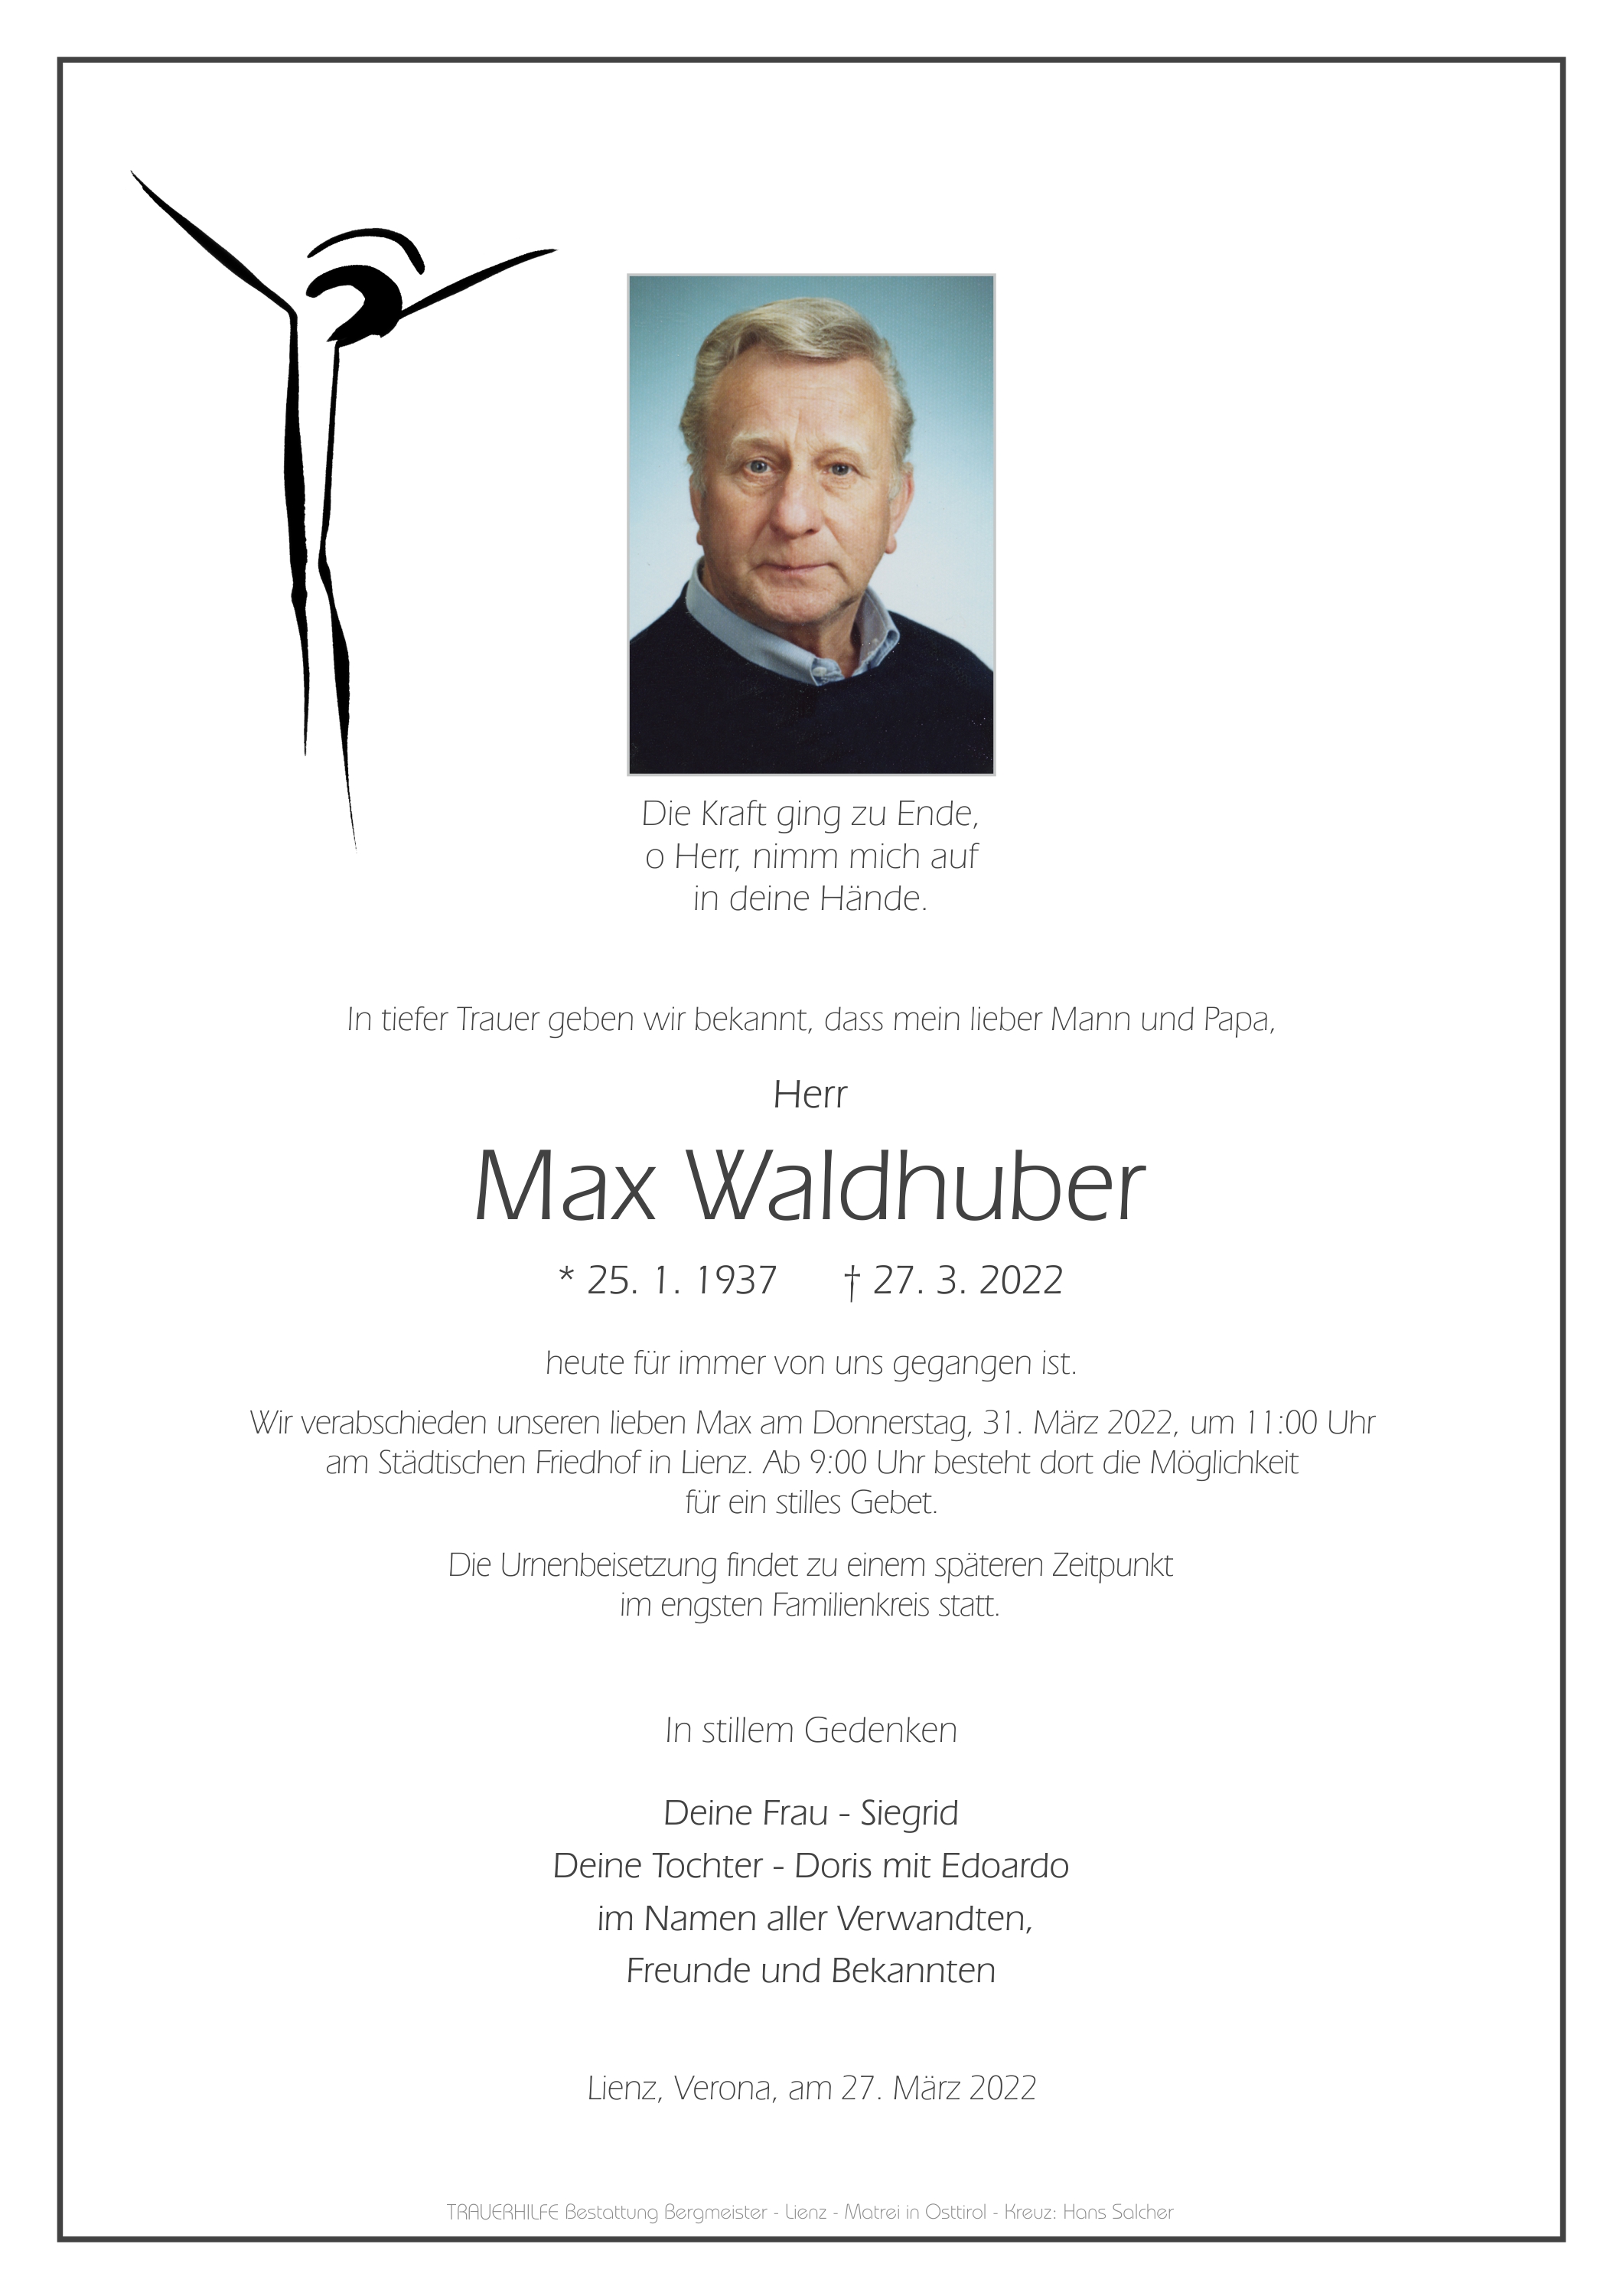 Max Waldhuber